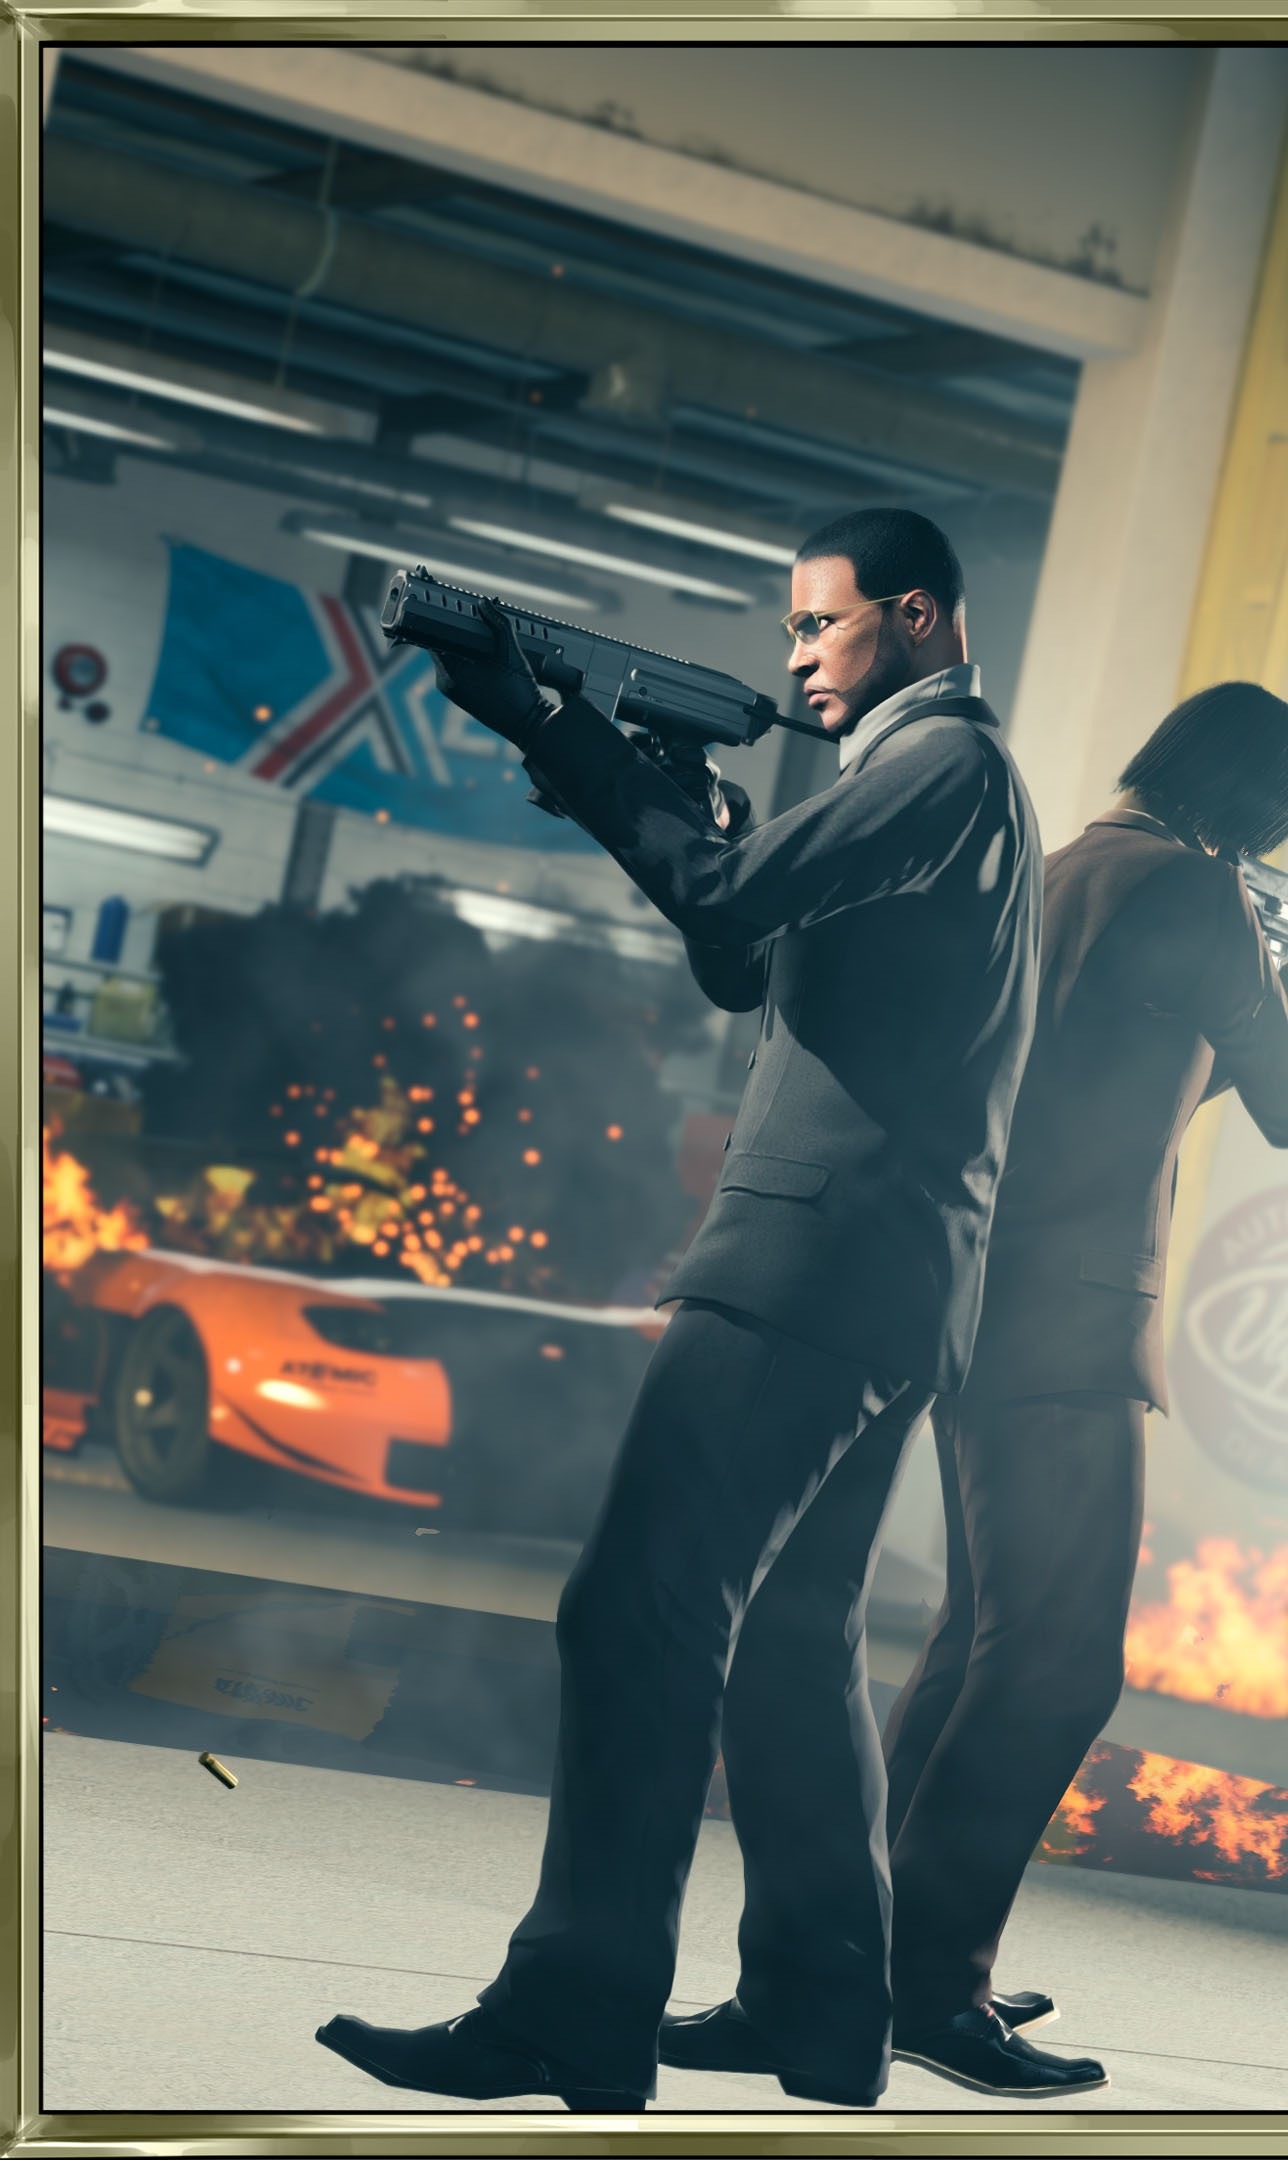 Grand Theft Auto 5 PS5 e Xbox Series X/S recebem ray-tracing